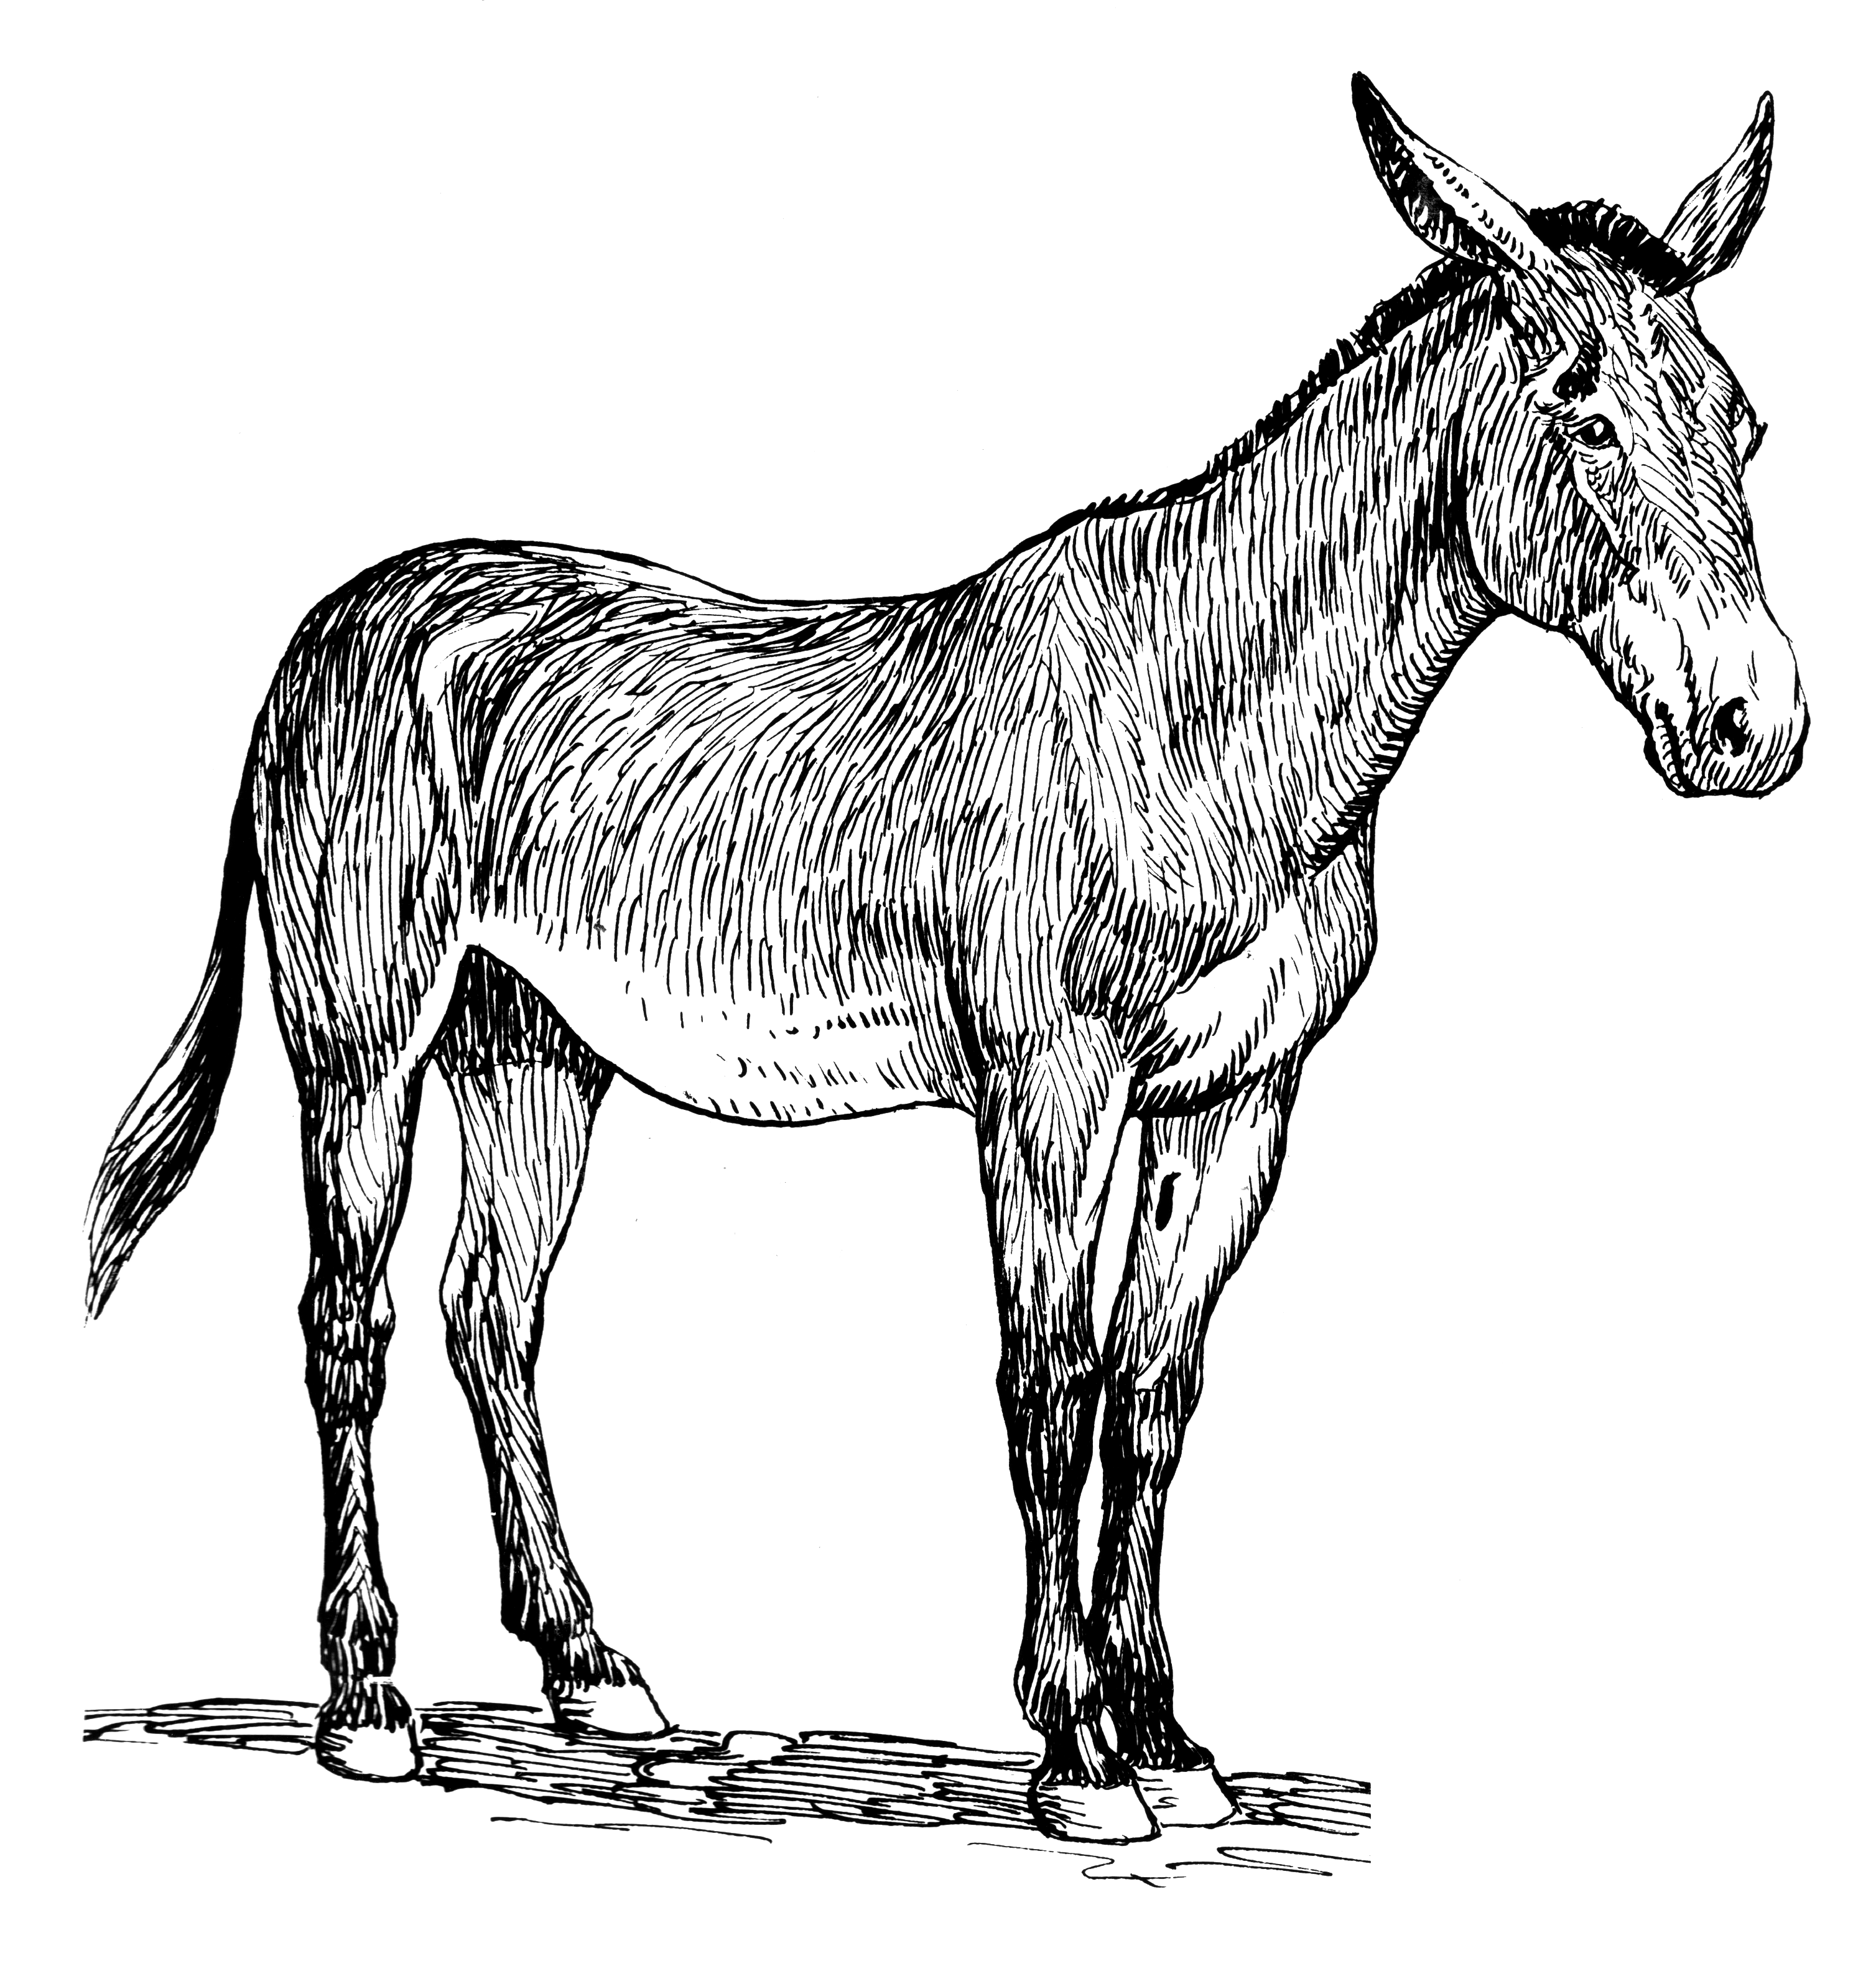 Walking mule, Mule, An Animal